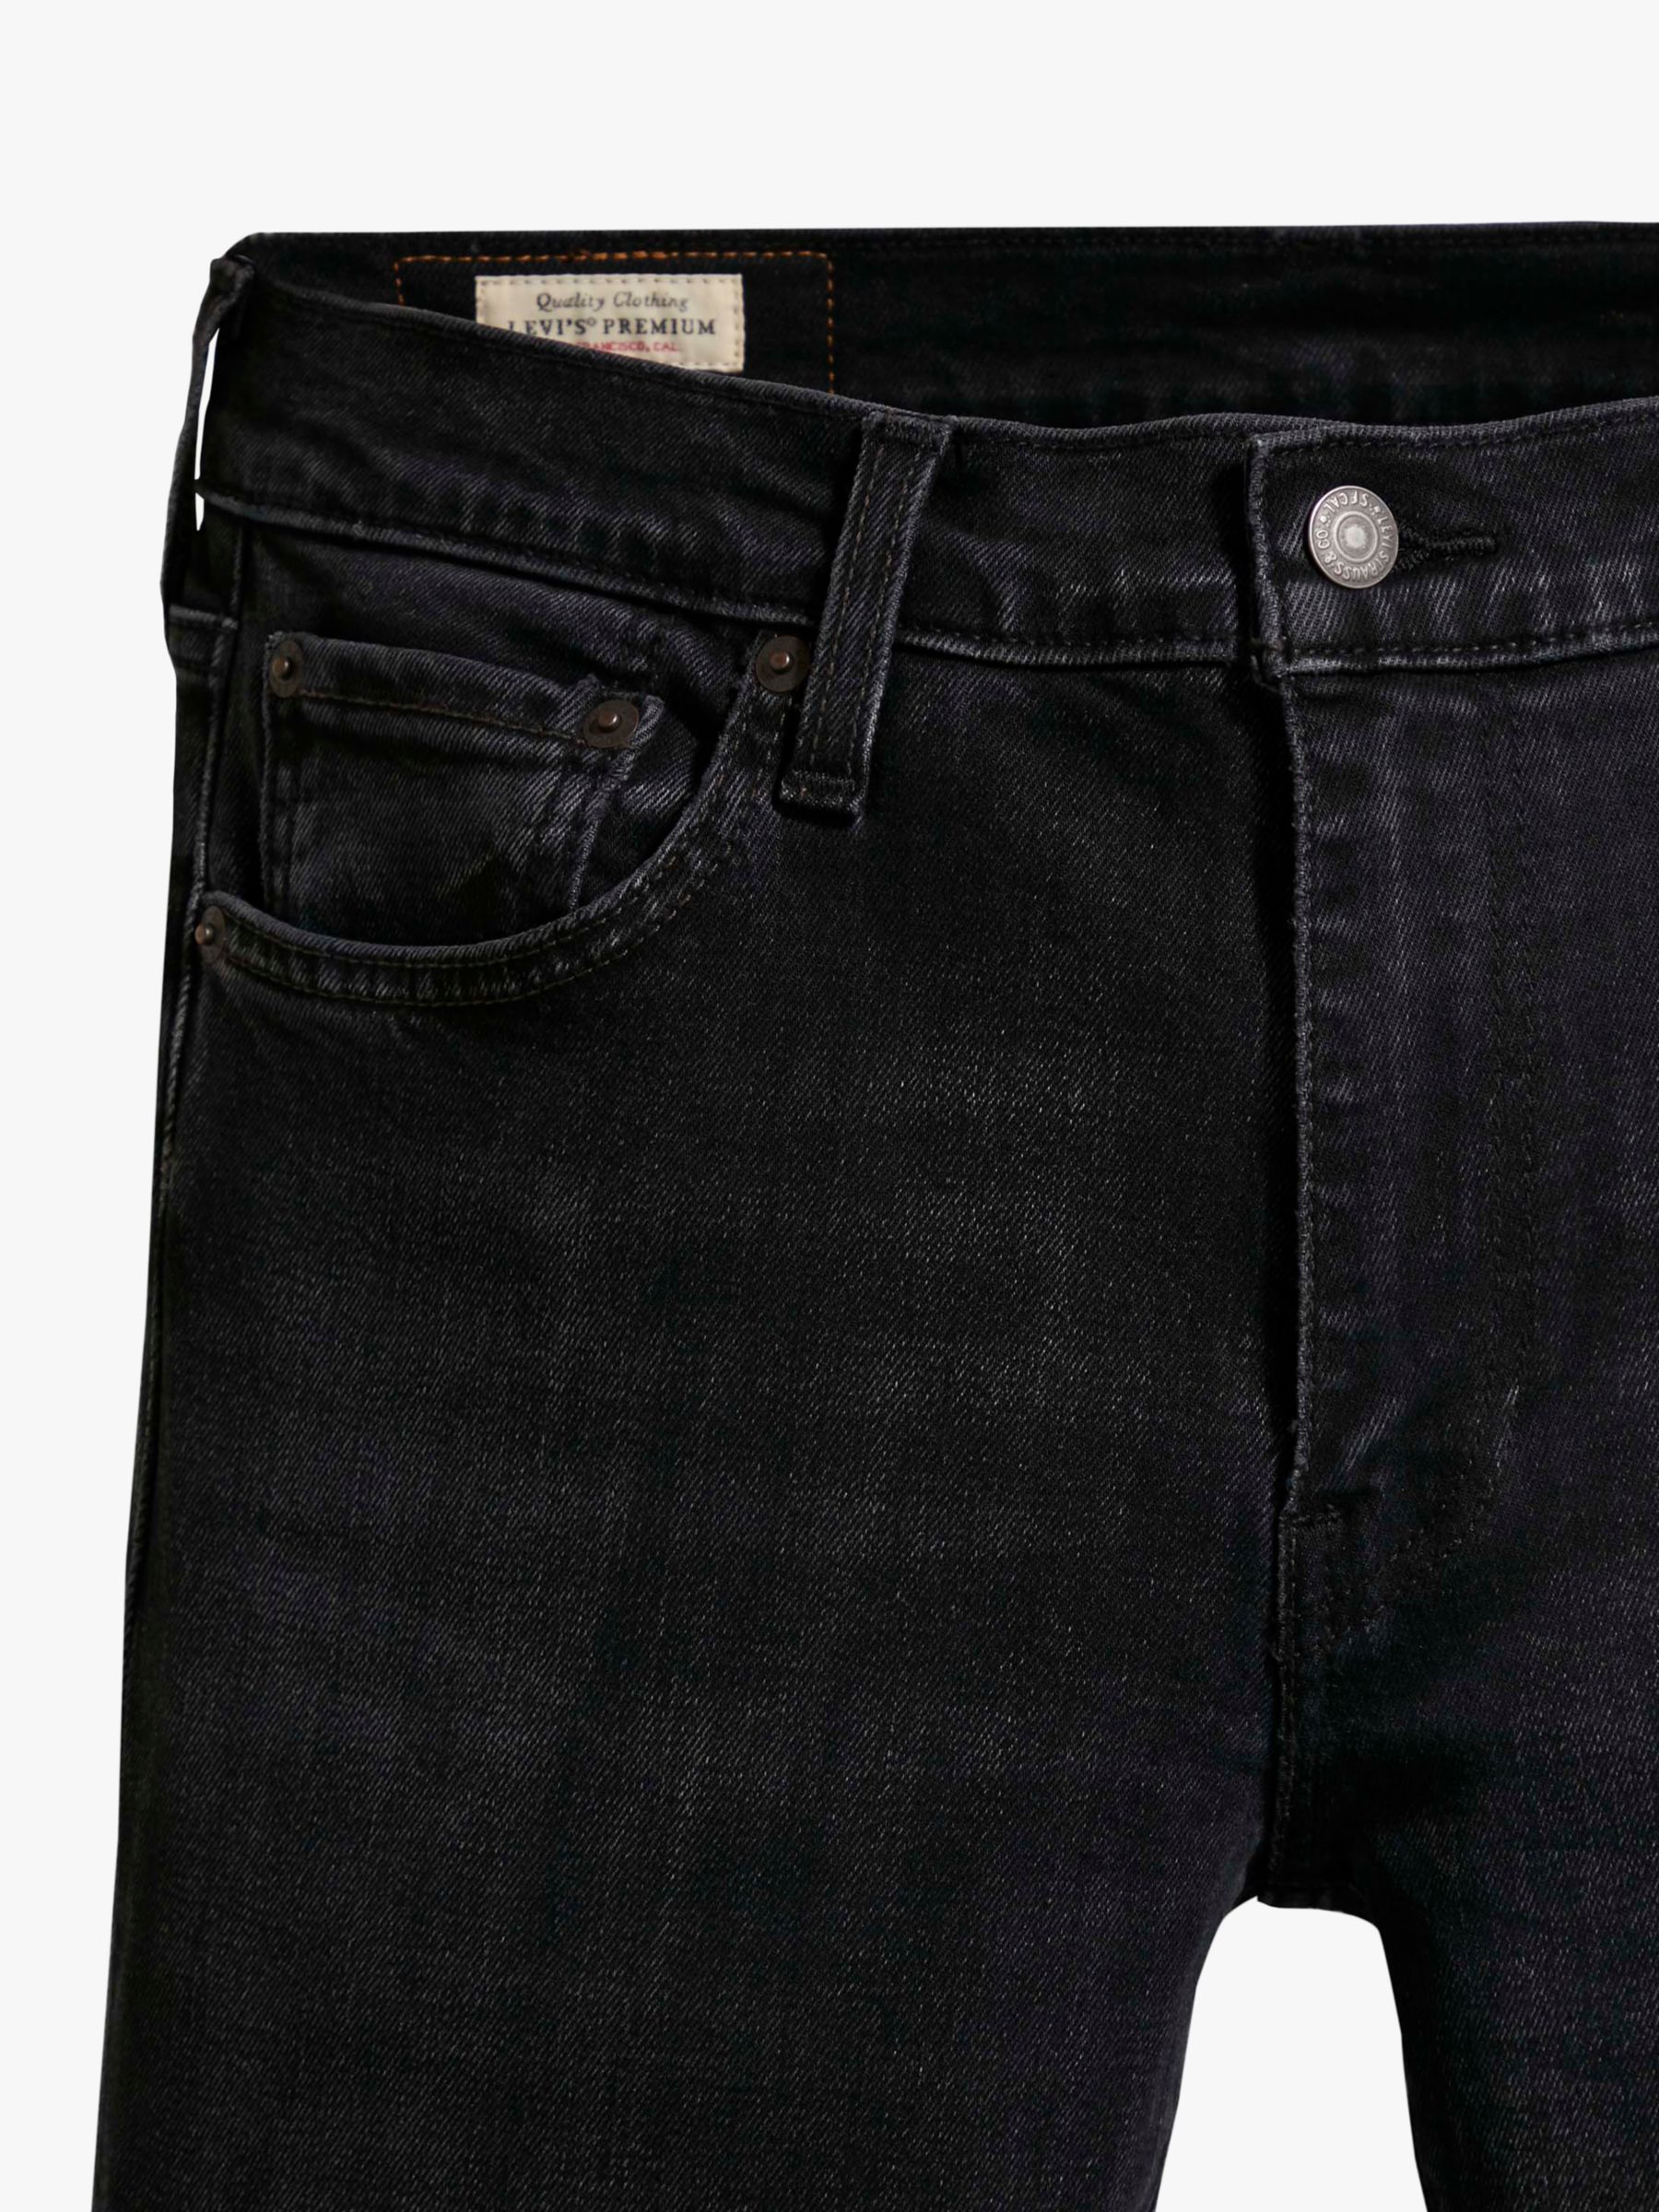 Levi's 511 Slim Fit Jeans, Caboose at John Lewis & Partners